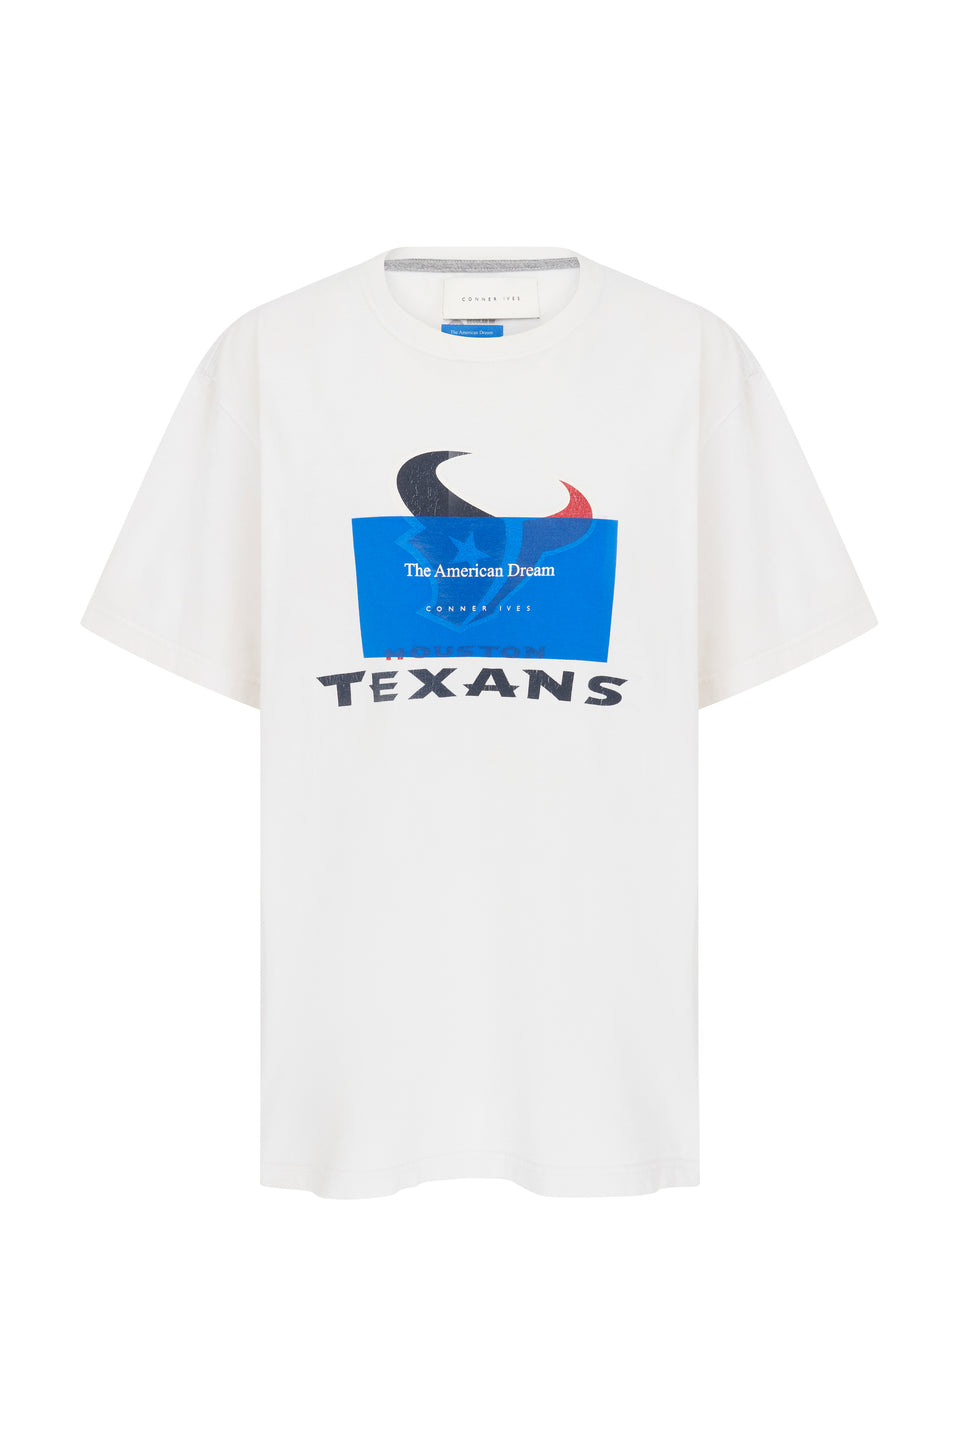 The American Dream Reprint T-shirt- Large